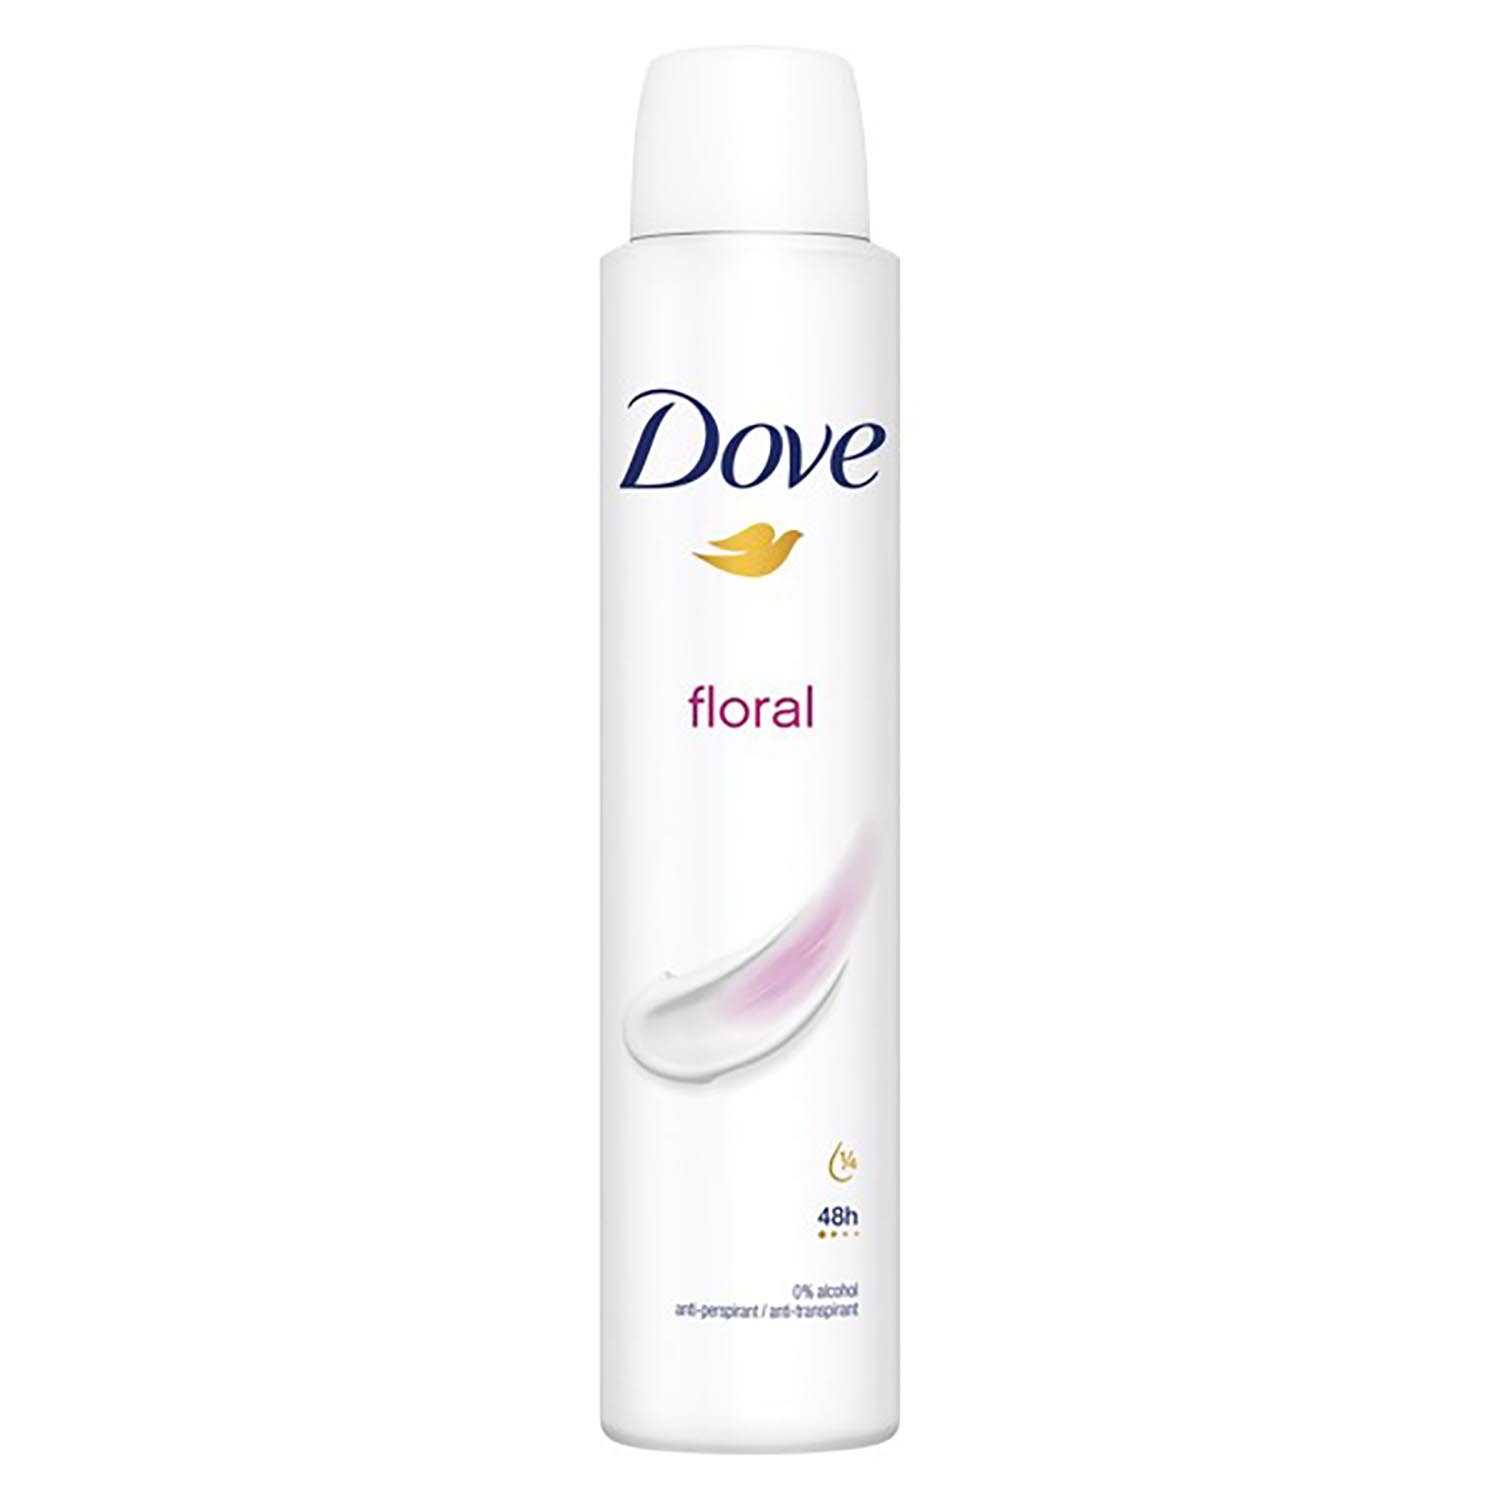 Dove Floral Anti-Perspirant 200ml - White Image